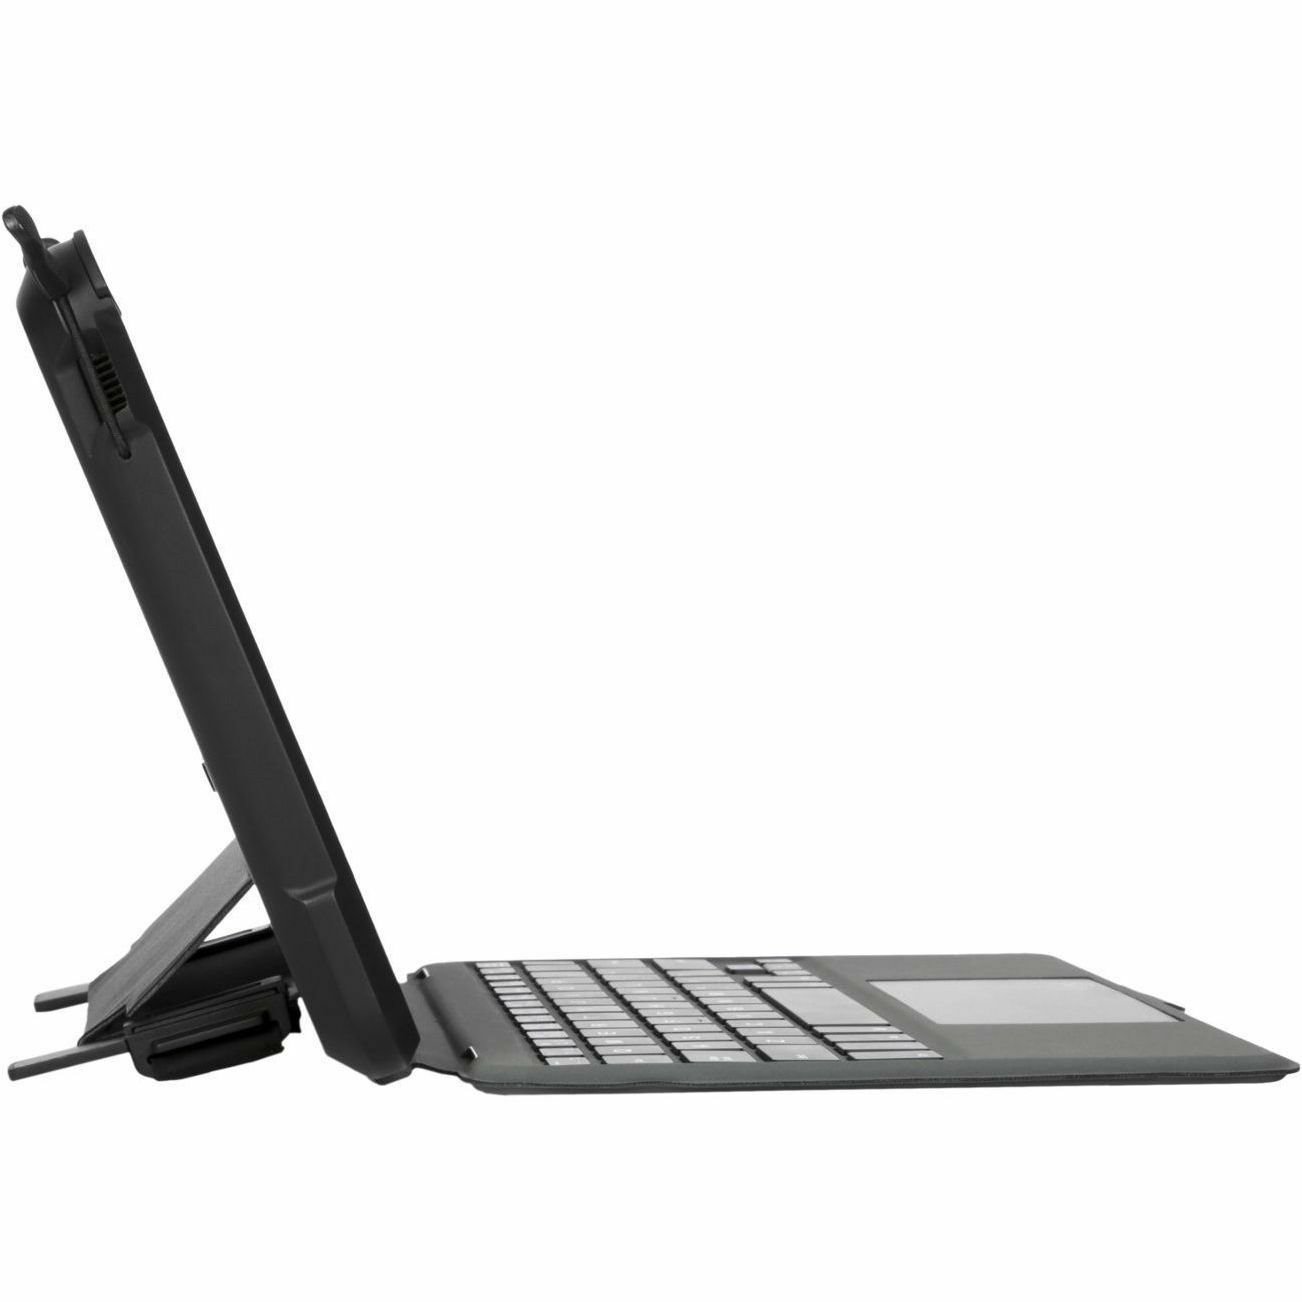 Targus Field-Ready THD933USZ Keyboard/Cover Case Samsung Galaxy Tab Active4 Pro Tablet, ID Card, Stylus - Black